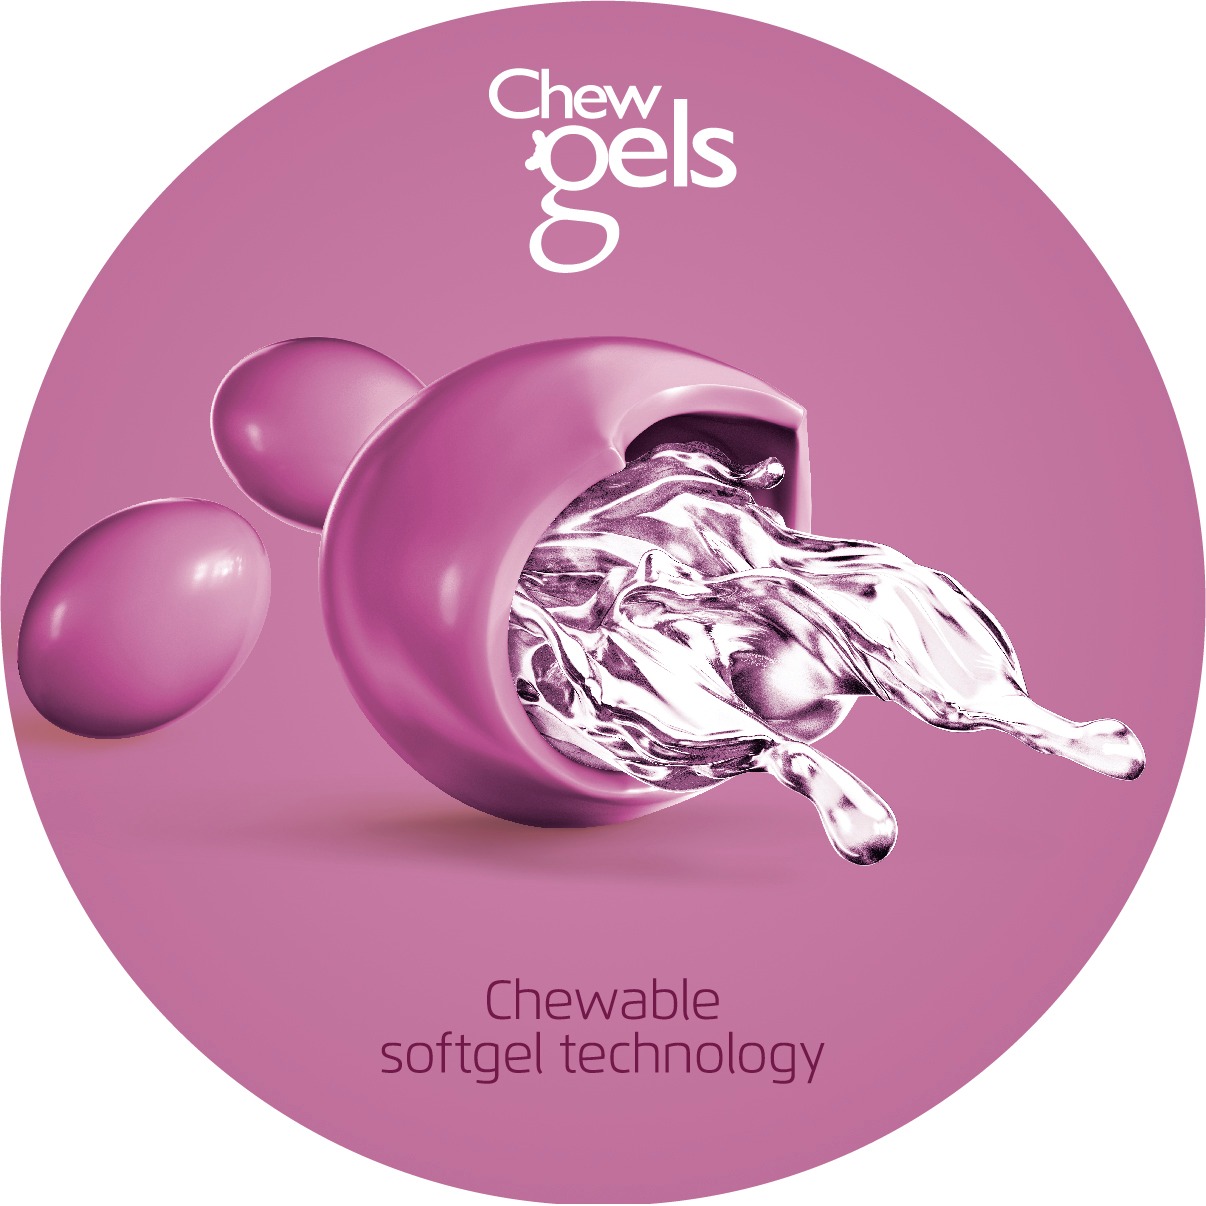 Chewgels - Chewable Soft Capsules